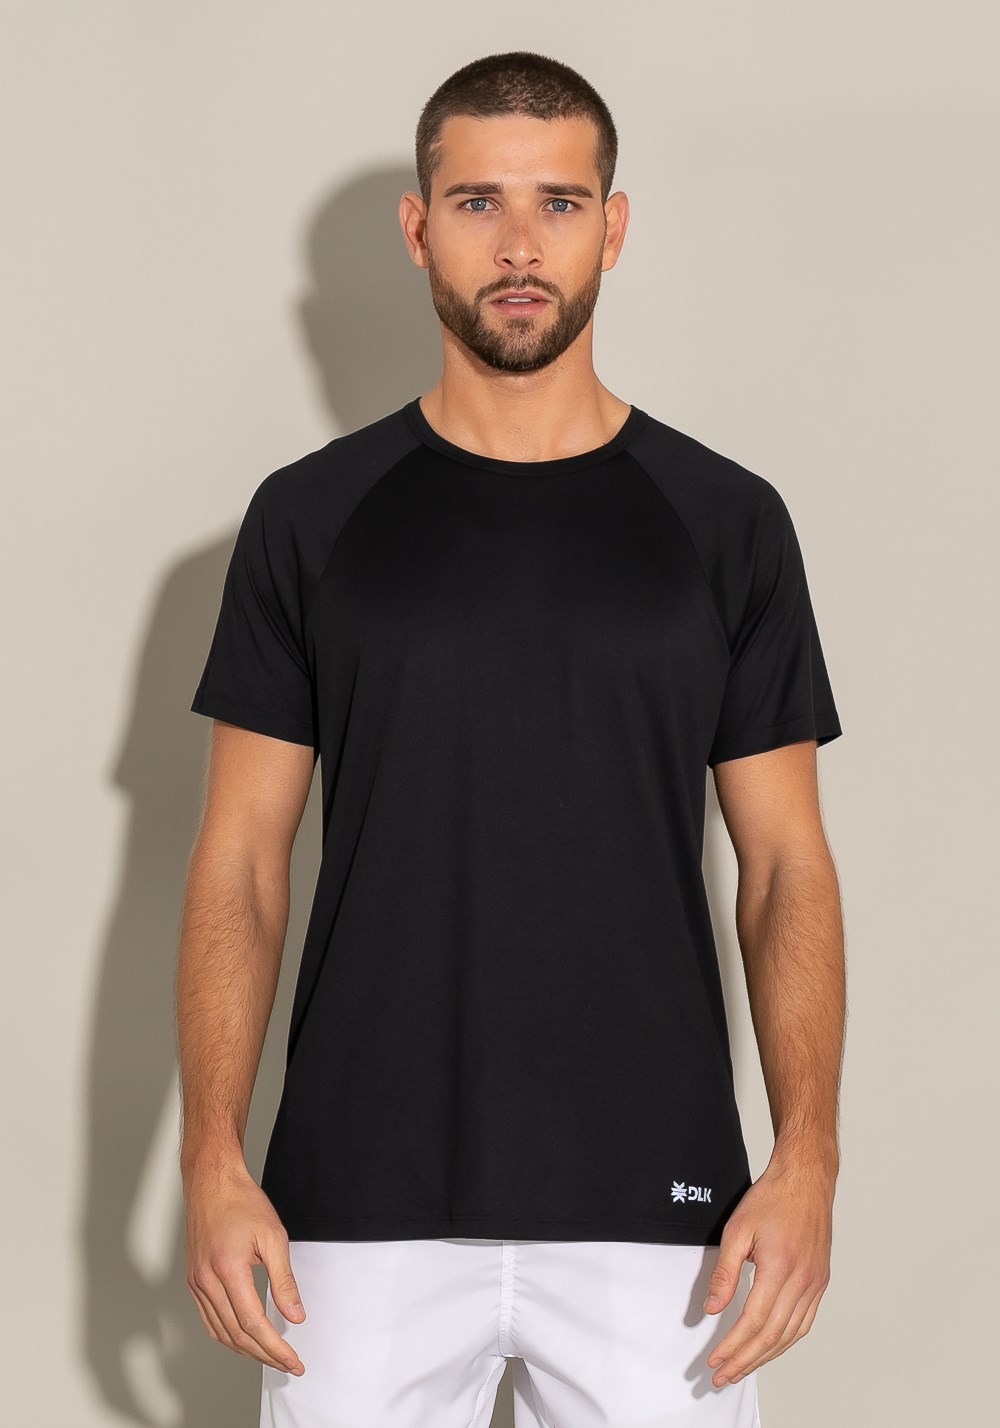 Camiseta poliamida manga curta modelo raglan for men preto